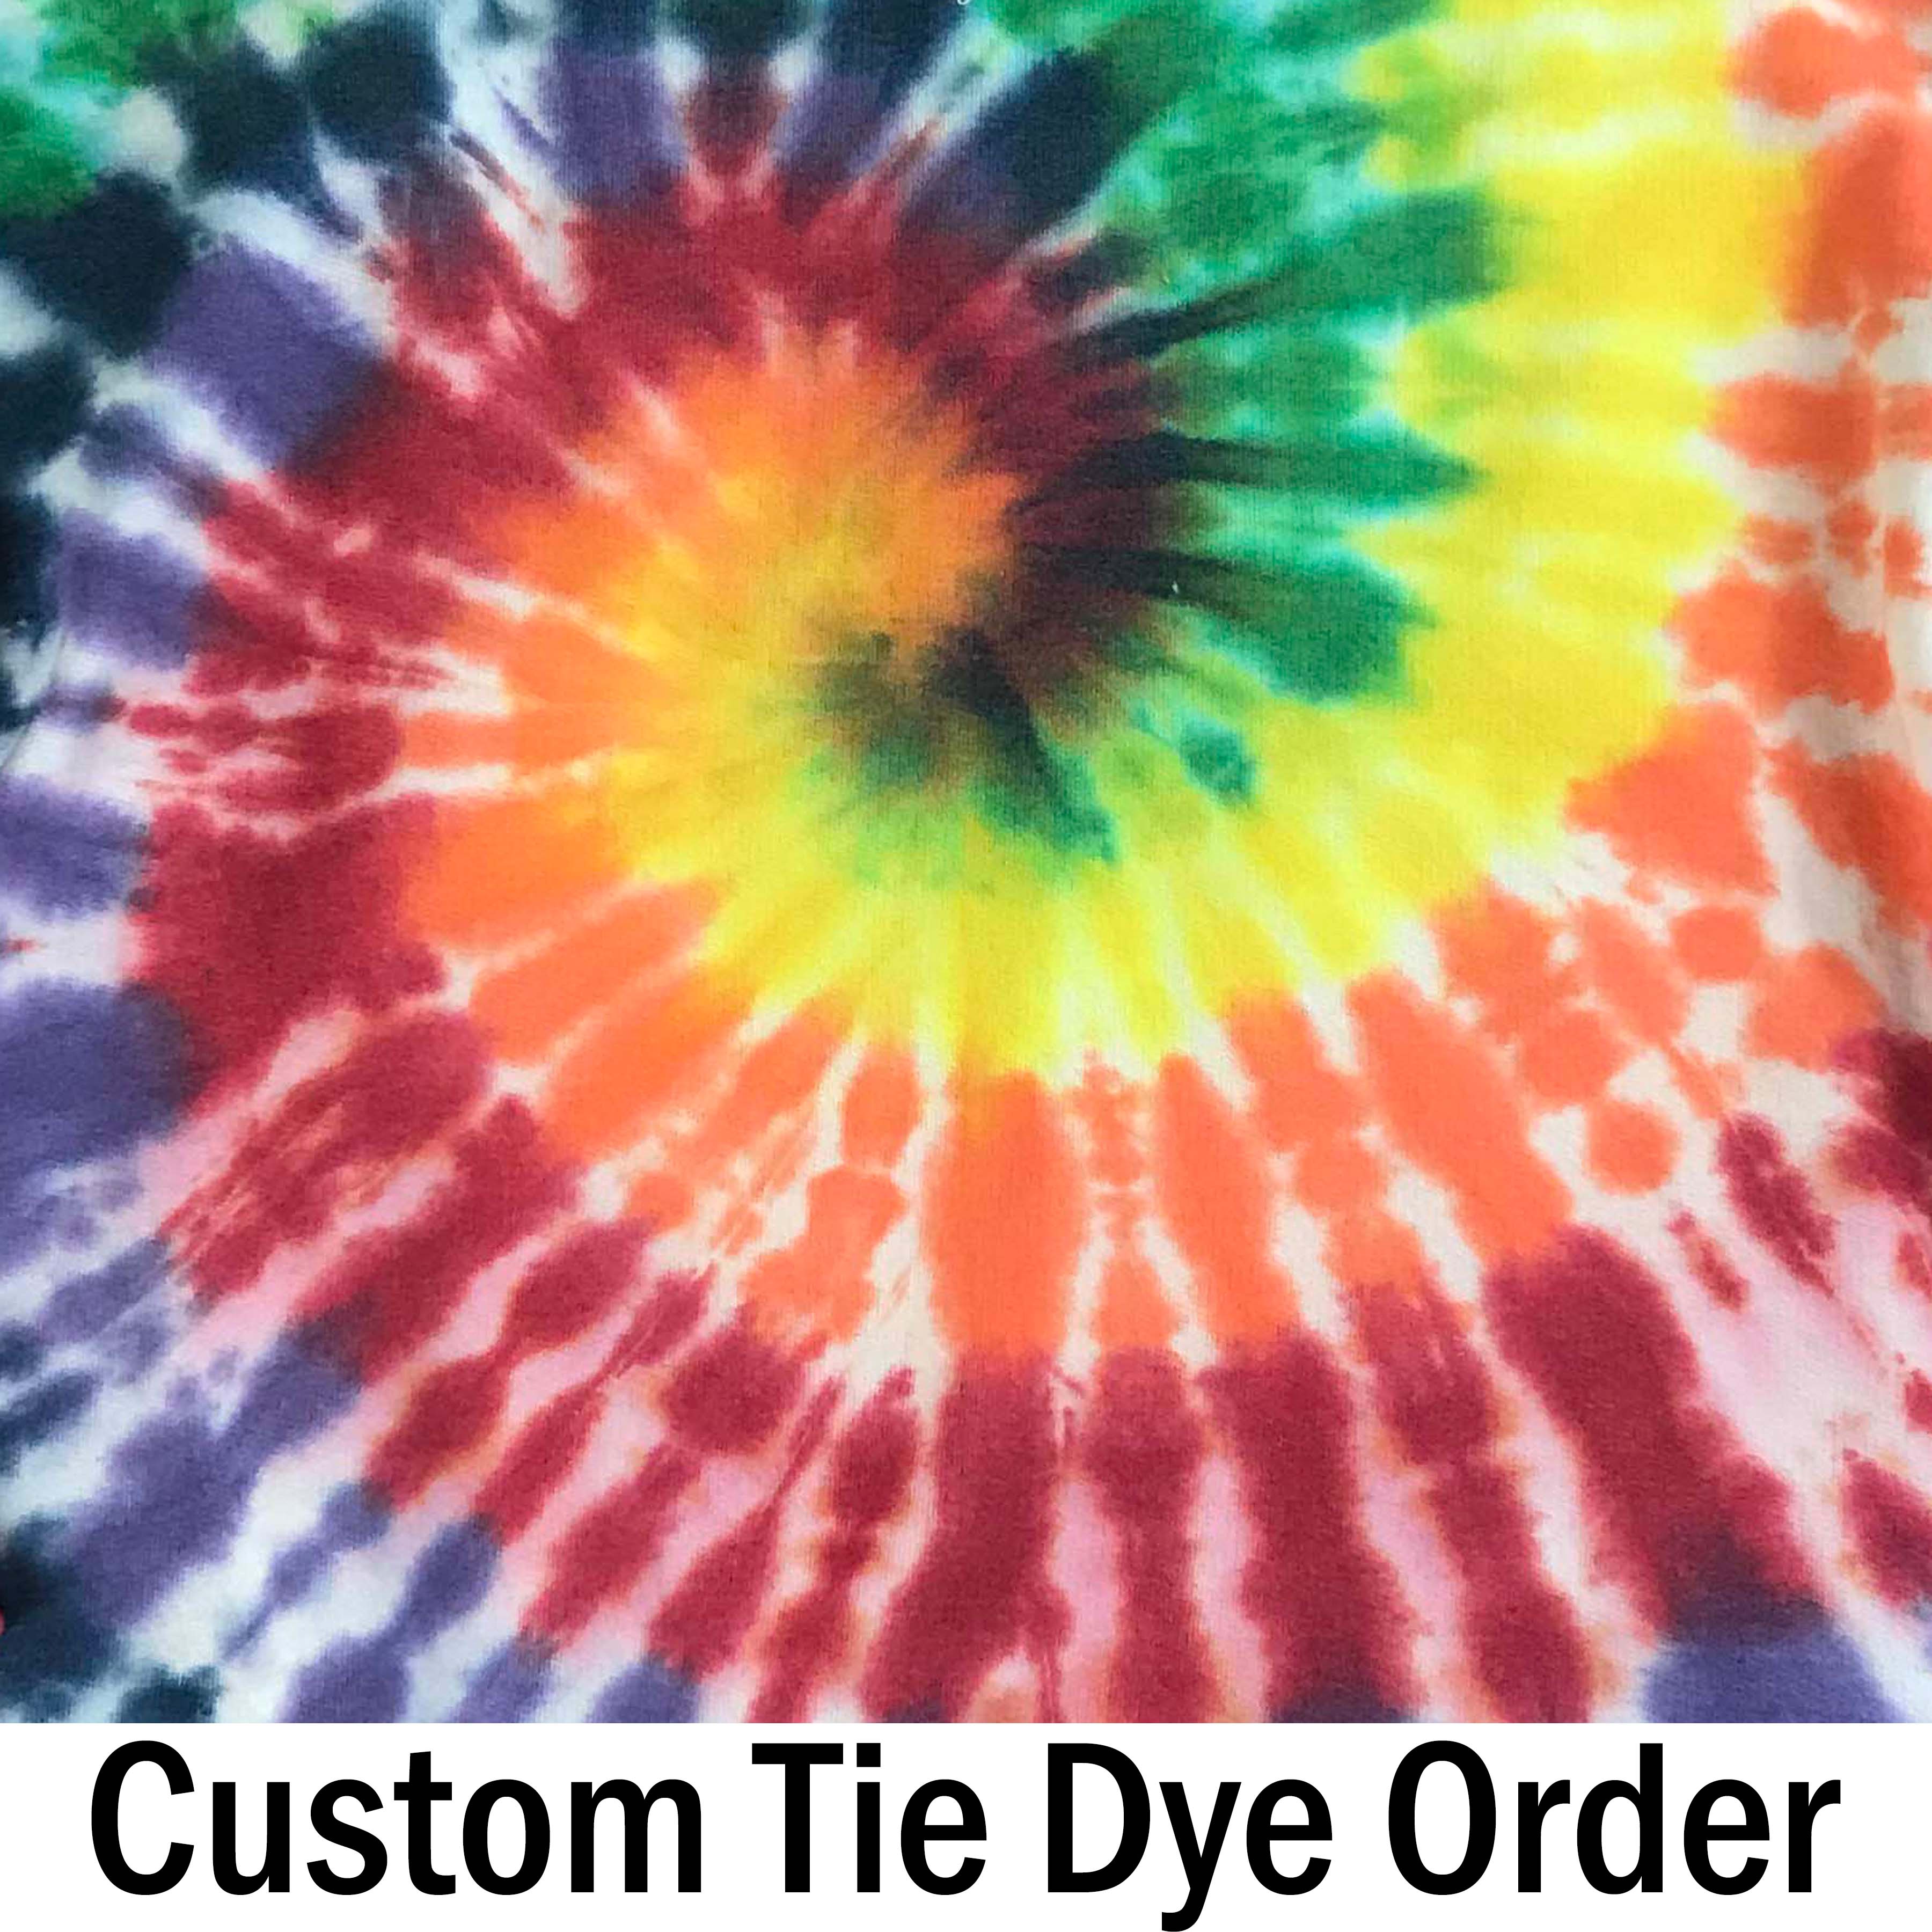 Design Your Own Tie Dye Shirt